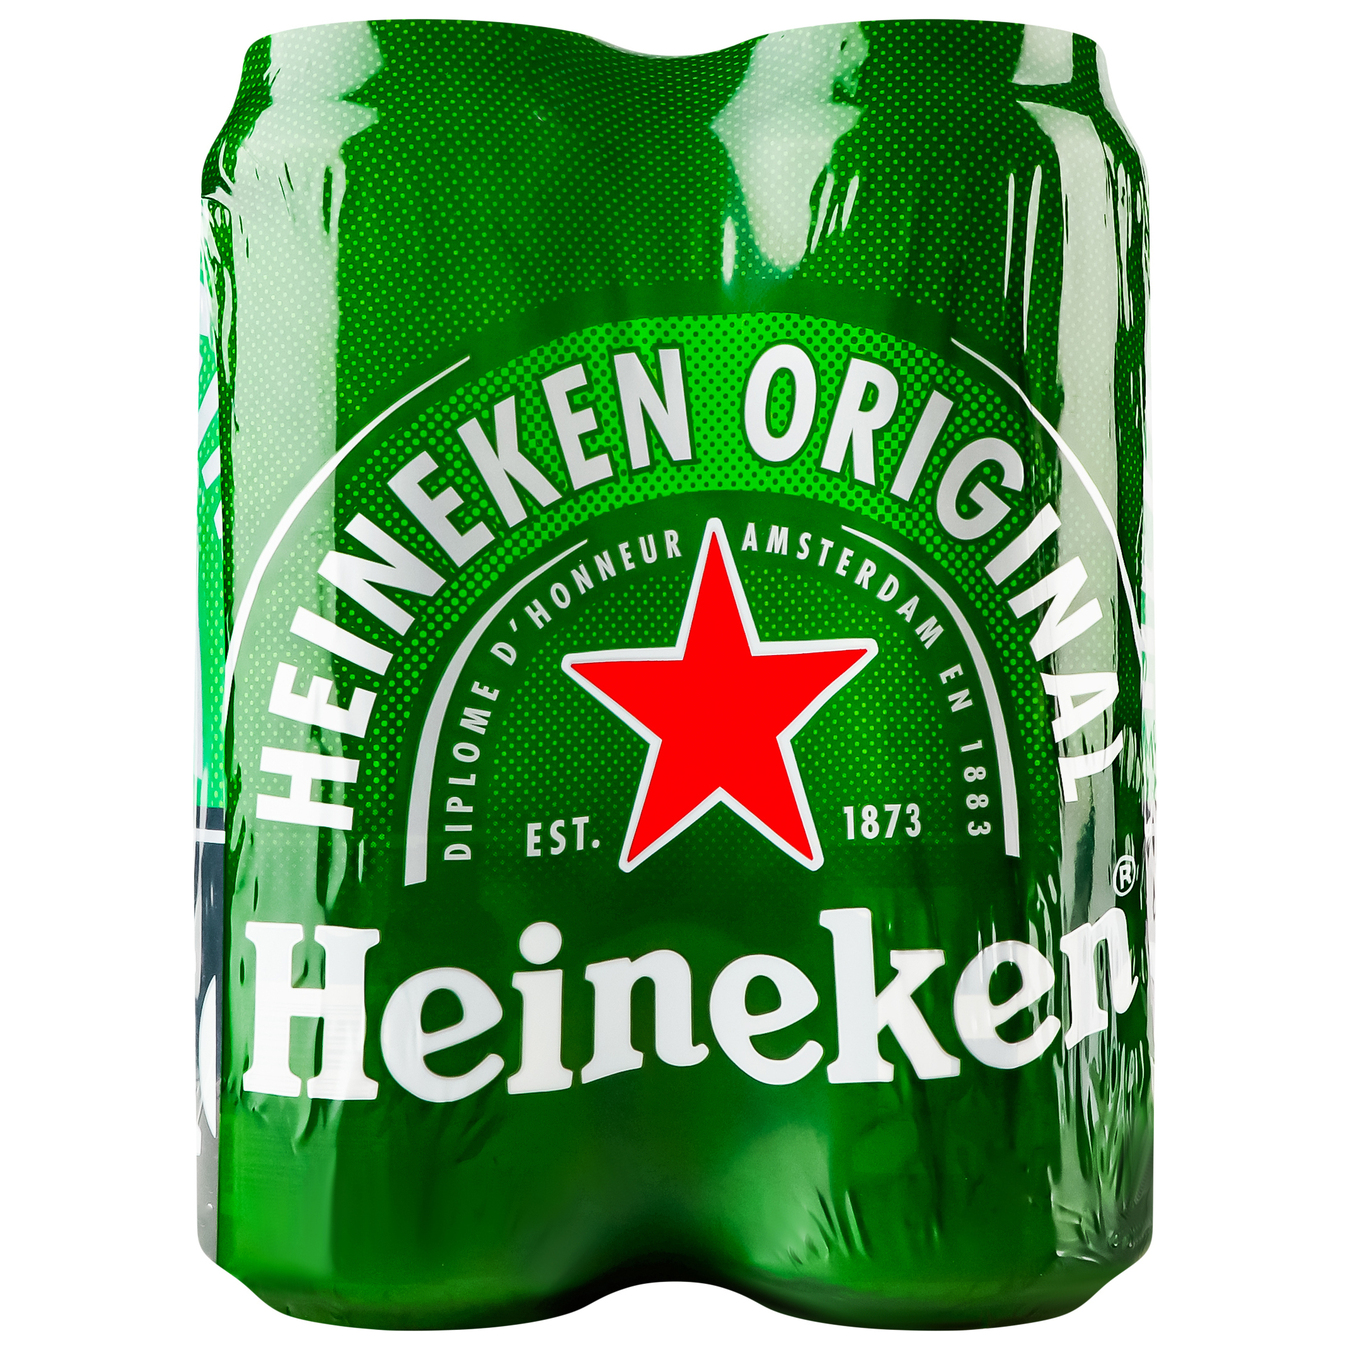 Heineken light filtered pasteurized Beer 5% 4*500ml/pack